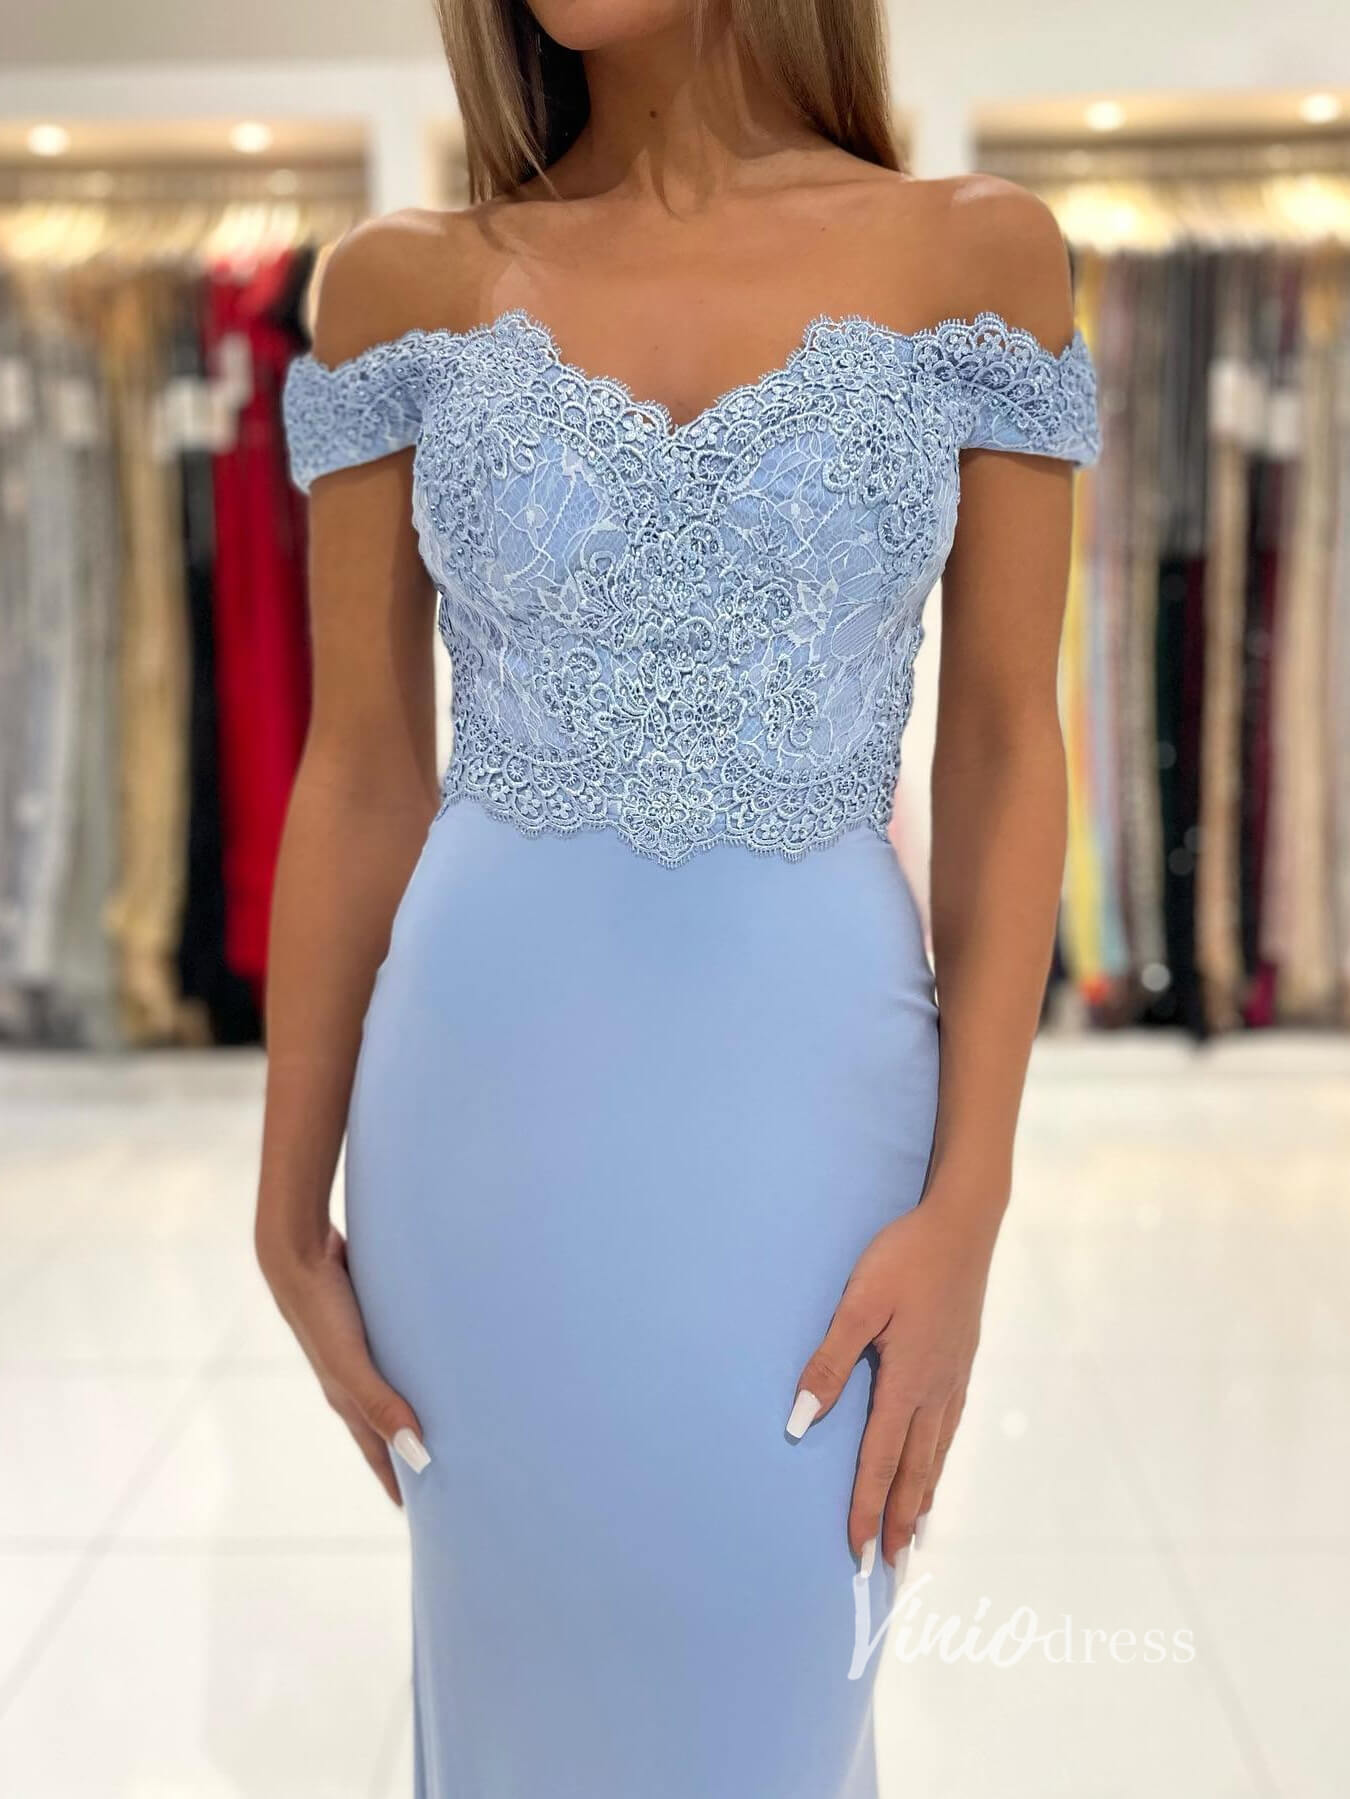 Light Blue Mermaid Prom Dresses Lace Applique Off the Shoulder Evening Dress FD2932-prom dresses-Viniodress-Viniodress